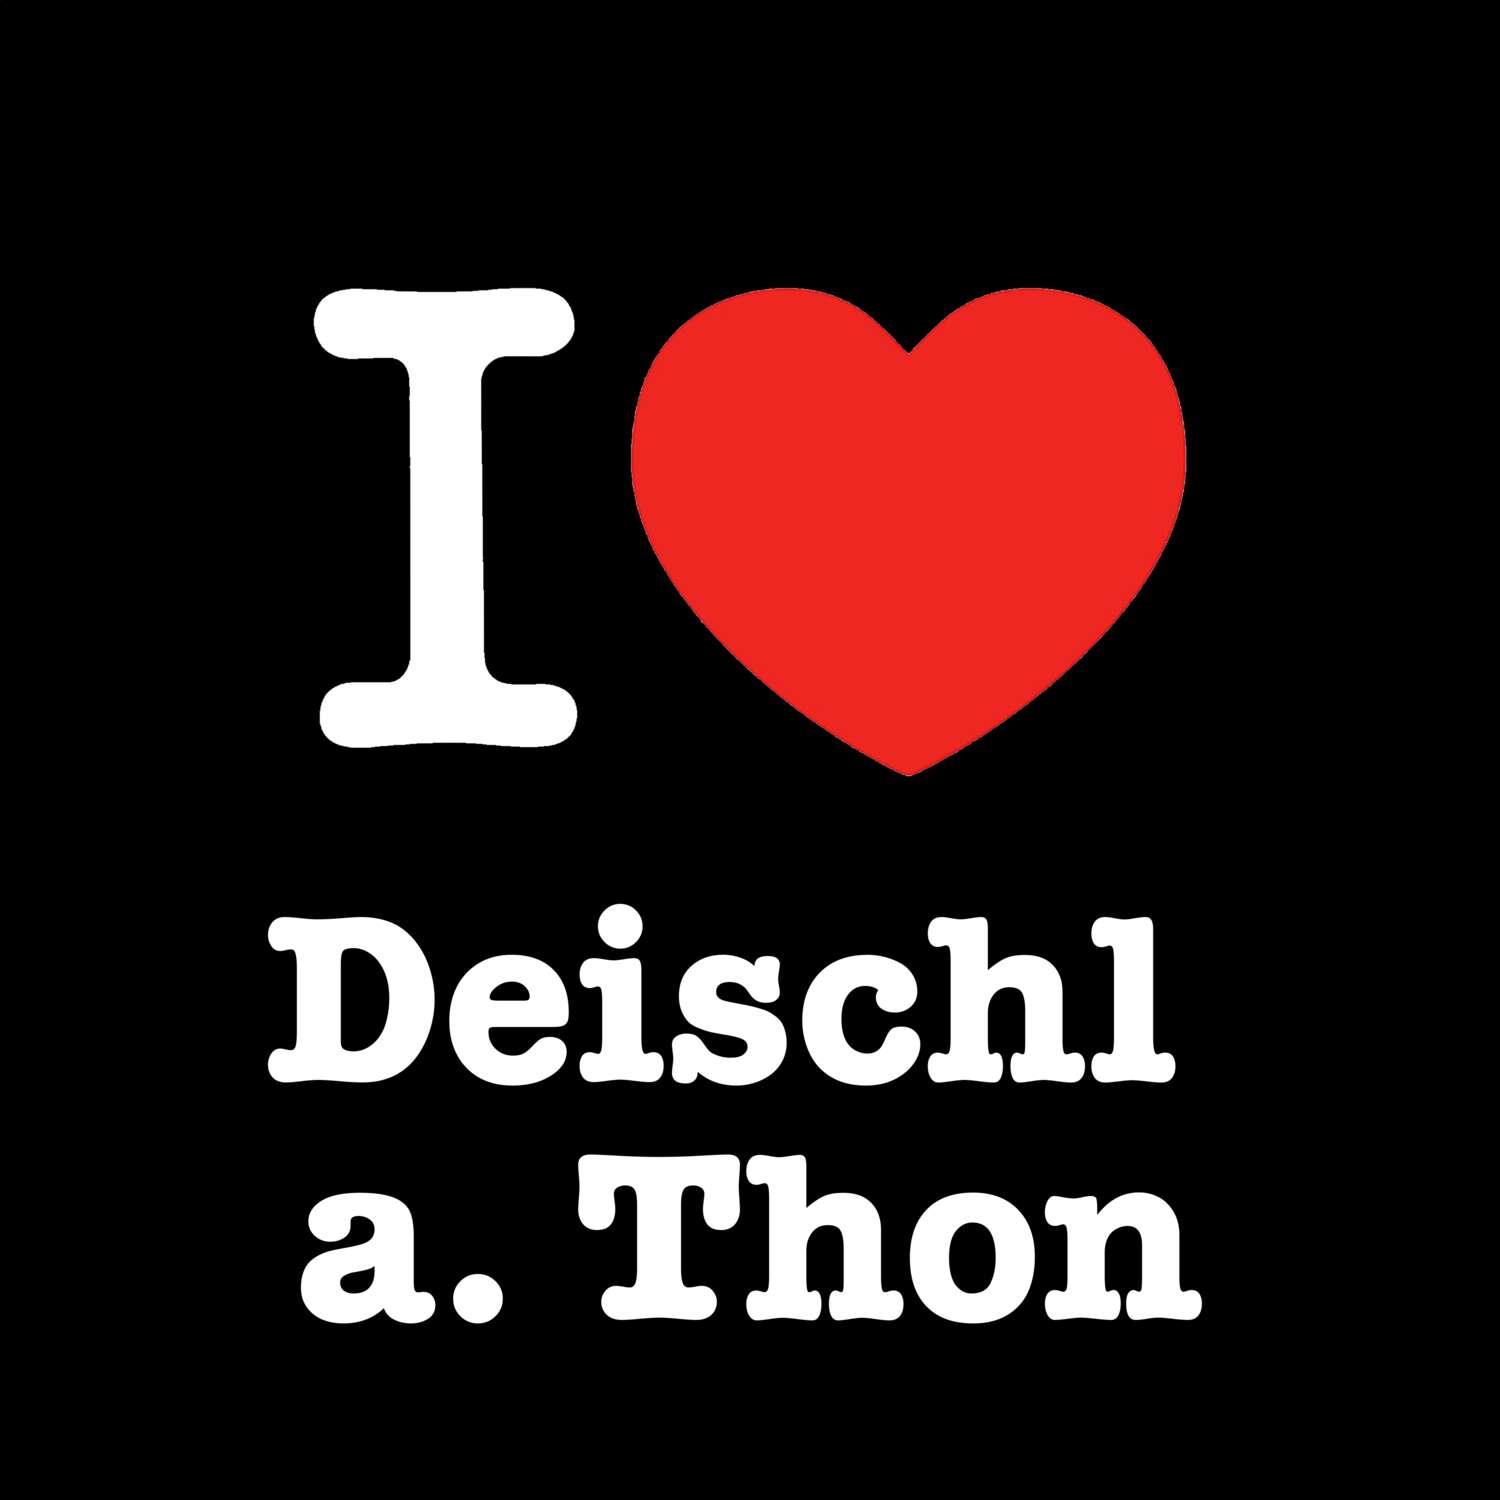 Deischl a. Thon T-Shirt »I love«